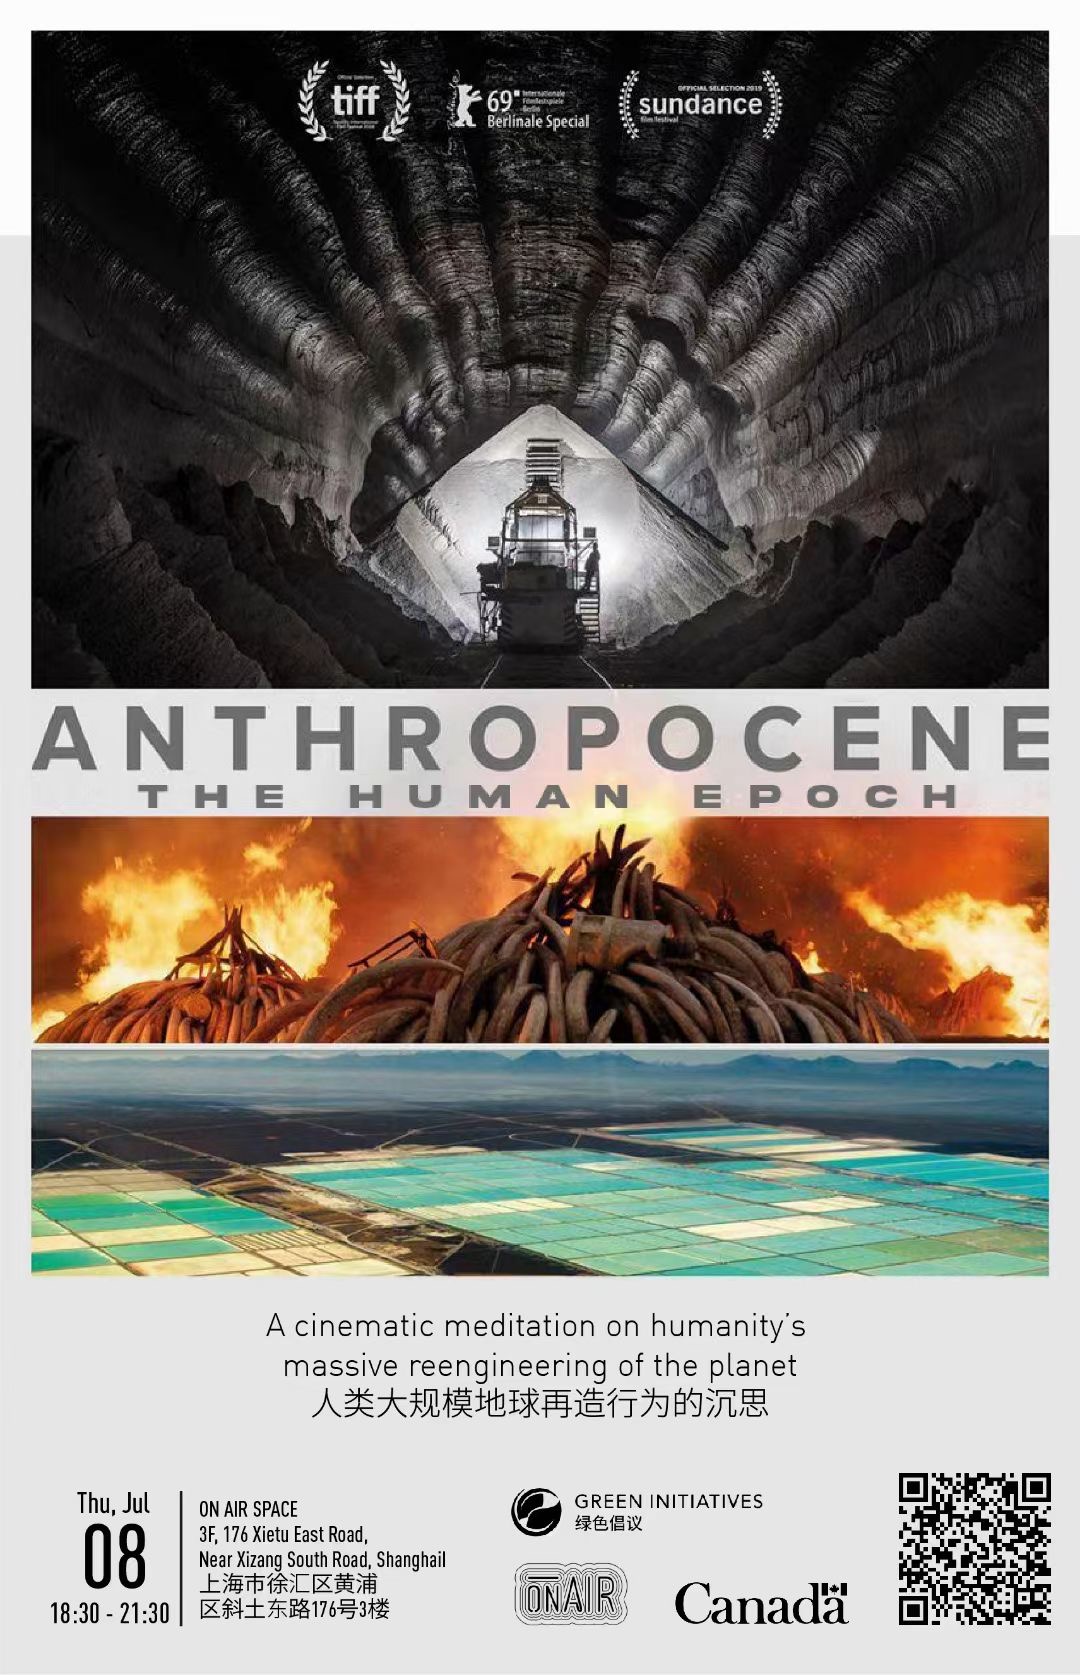 Anthropocene | the human epoch